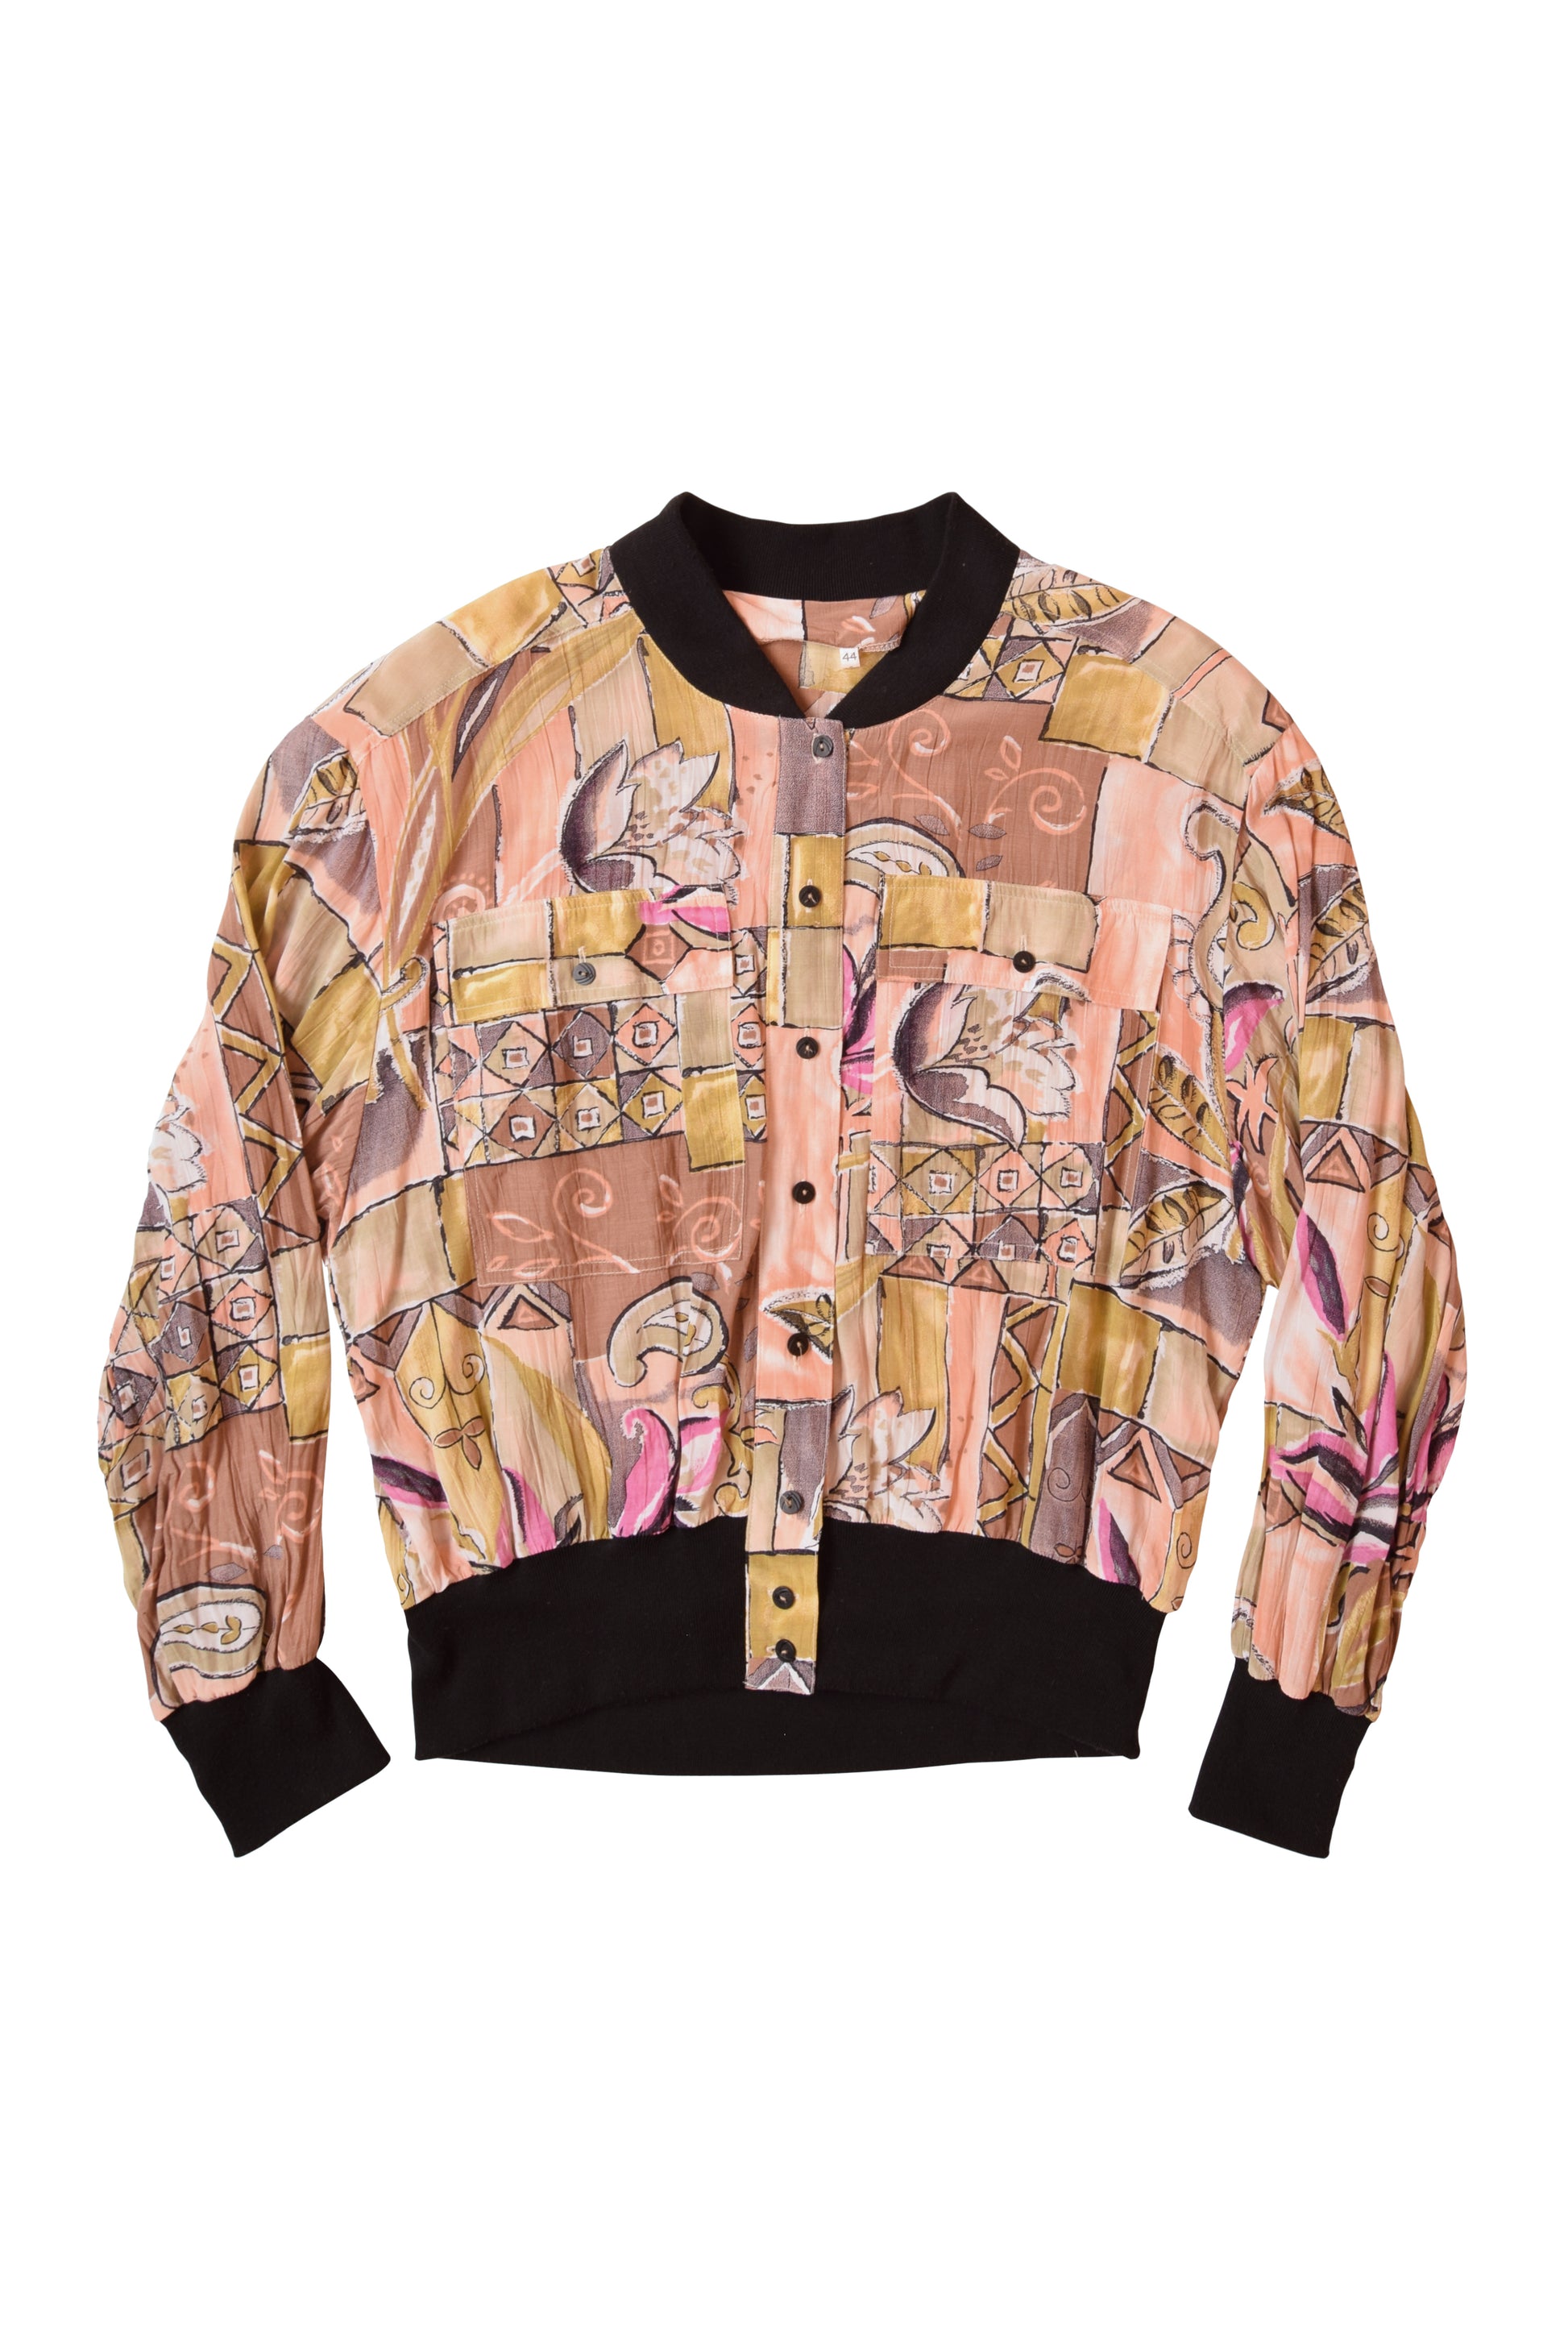 Vintage 80's Jacket / Shirt with Shoulder Pads Floral & Geometric Pattern Size M-L